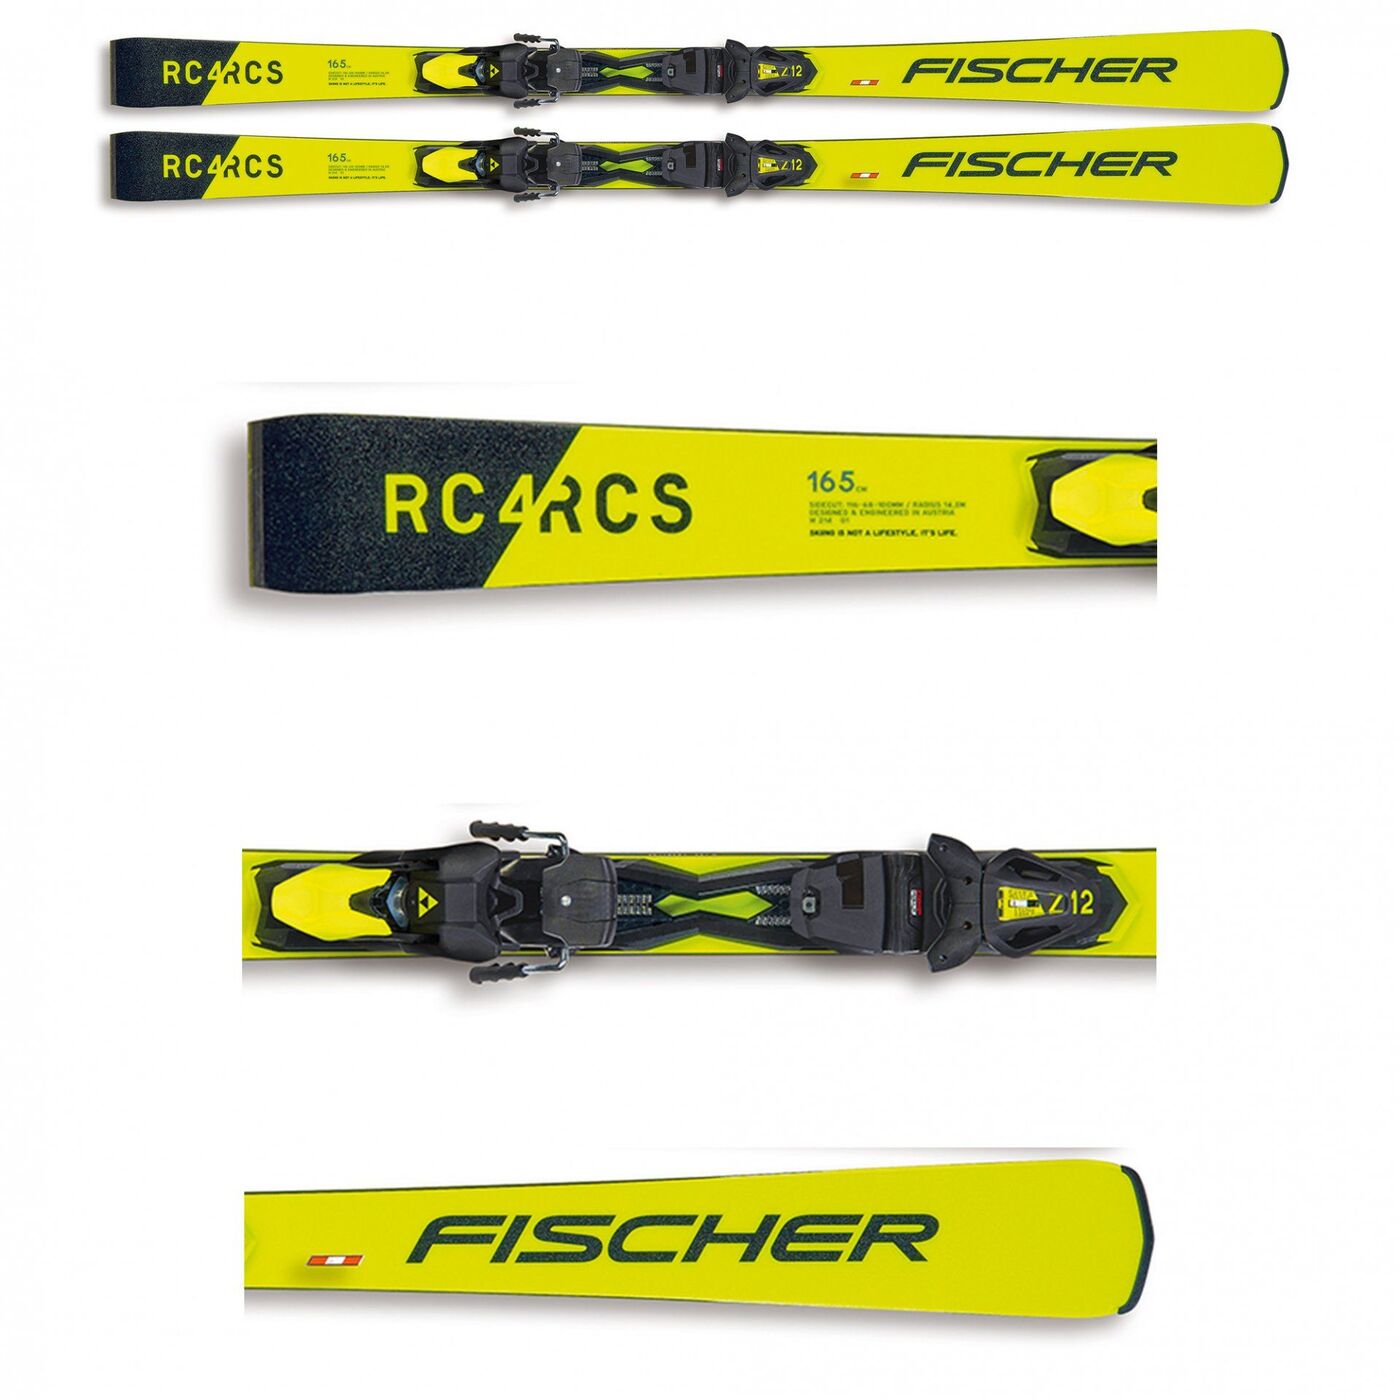 Rc4 xtr. Горные лыжи Фишер rc4 145. Горные лыжи Фишер rc4 super. Fischer лыжи rc4 Frequency Tuning горные 2018. Горные лыжи Фишер RC 4 2004.